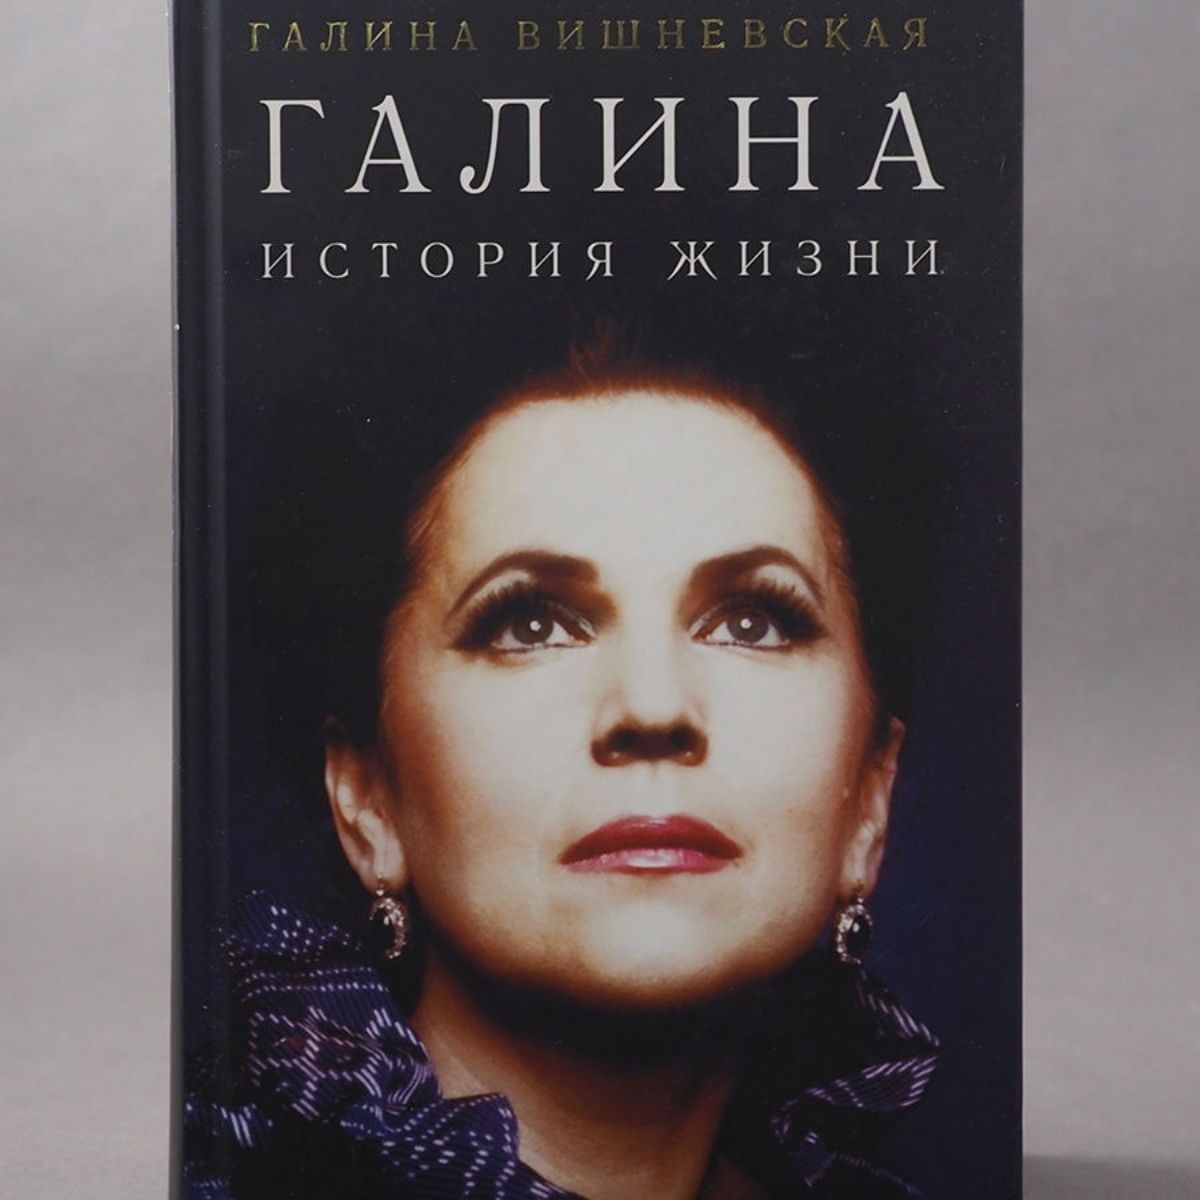 Galina Pavlovna Vishnevskaya's book "Galina: Life Story"